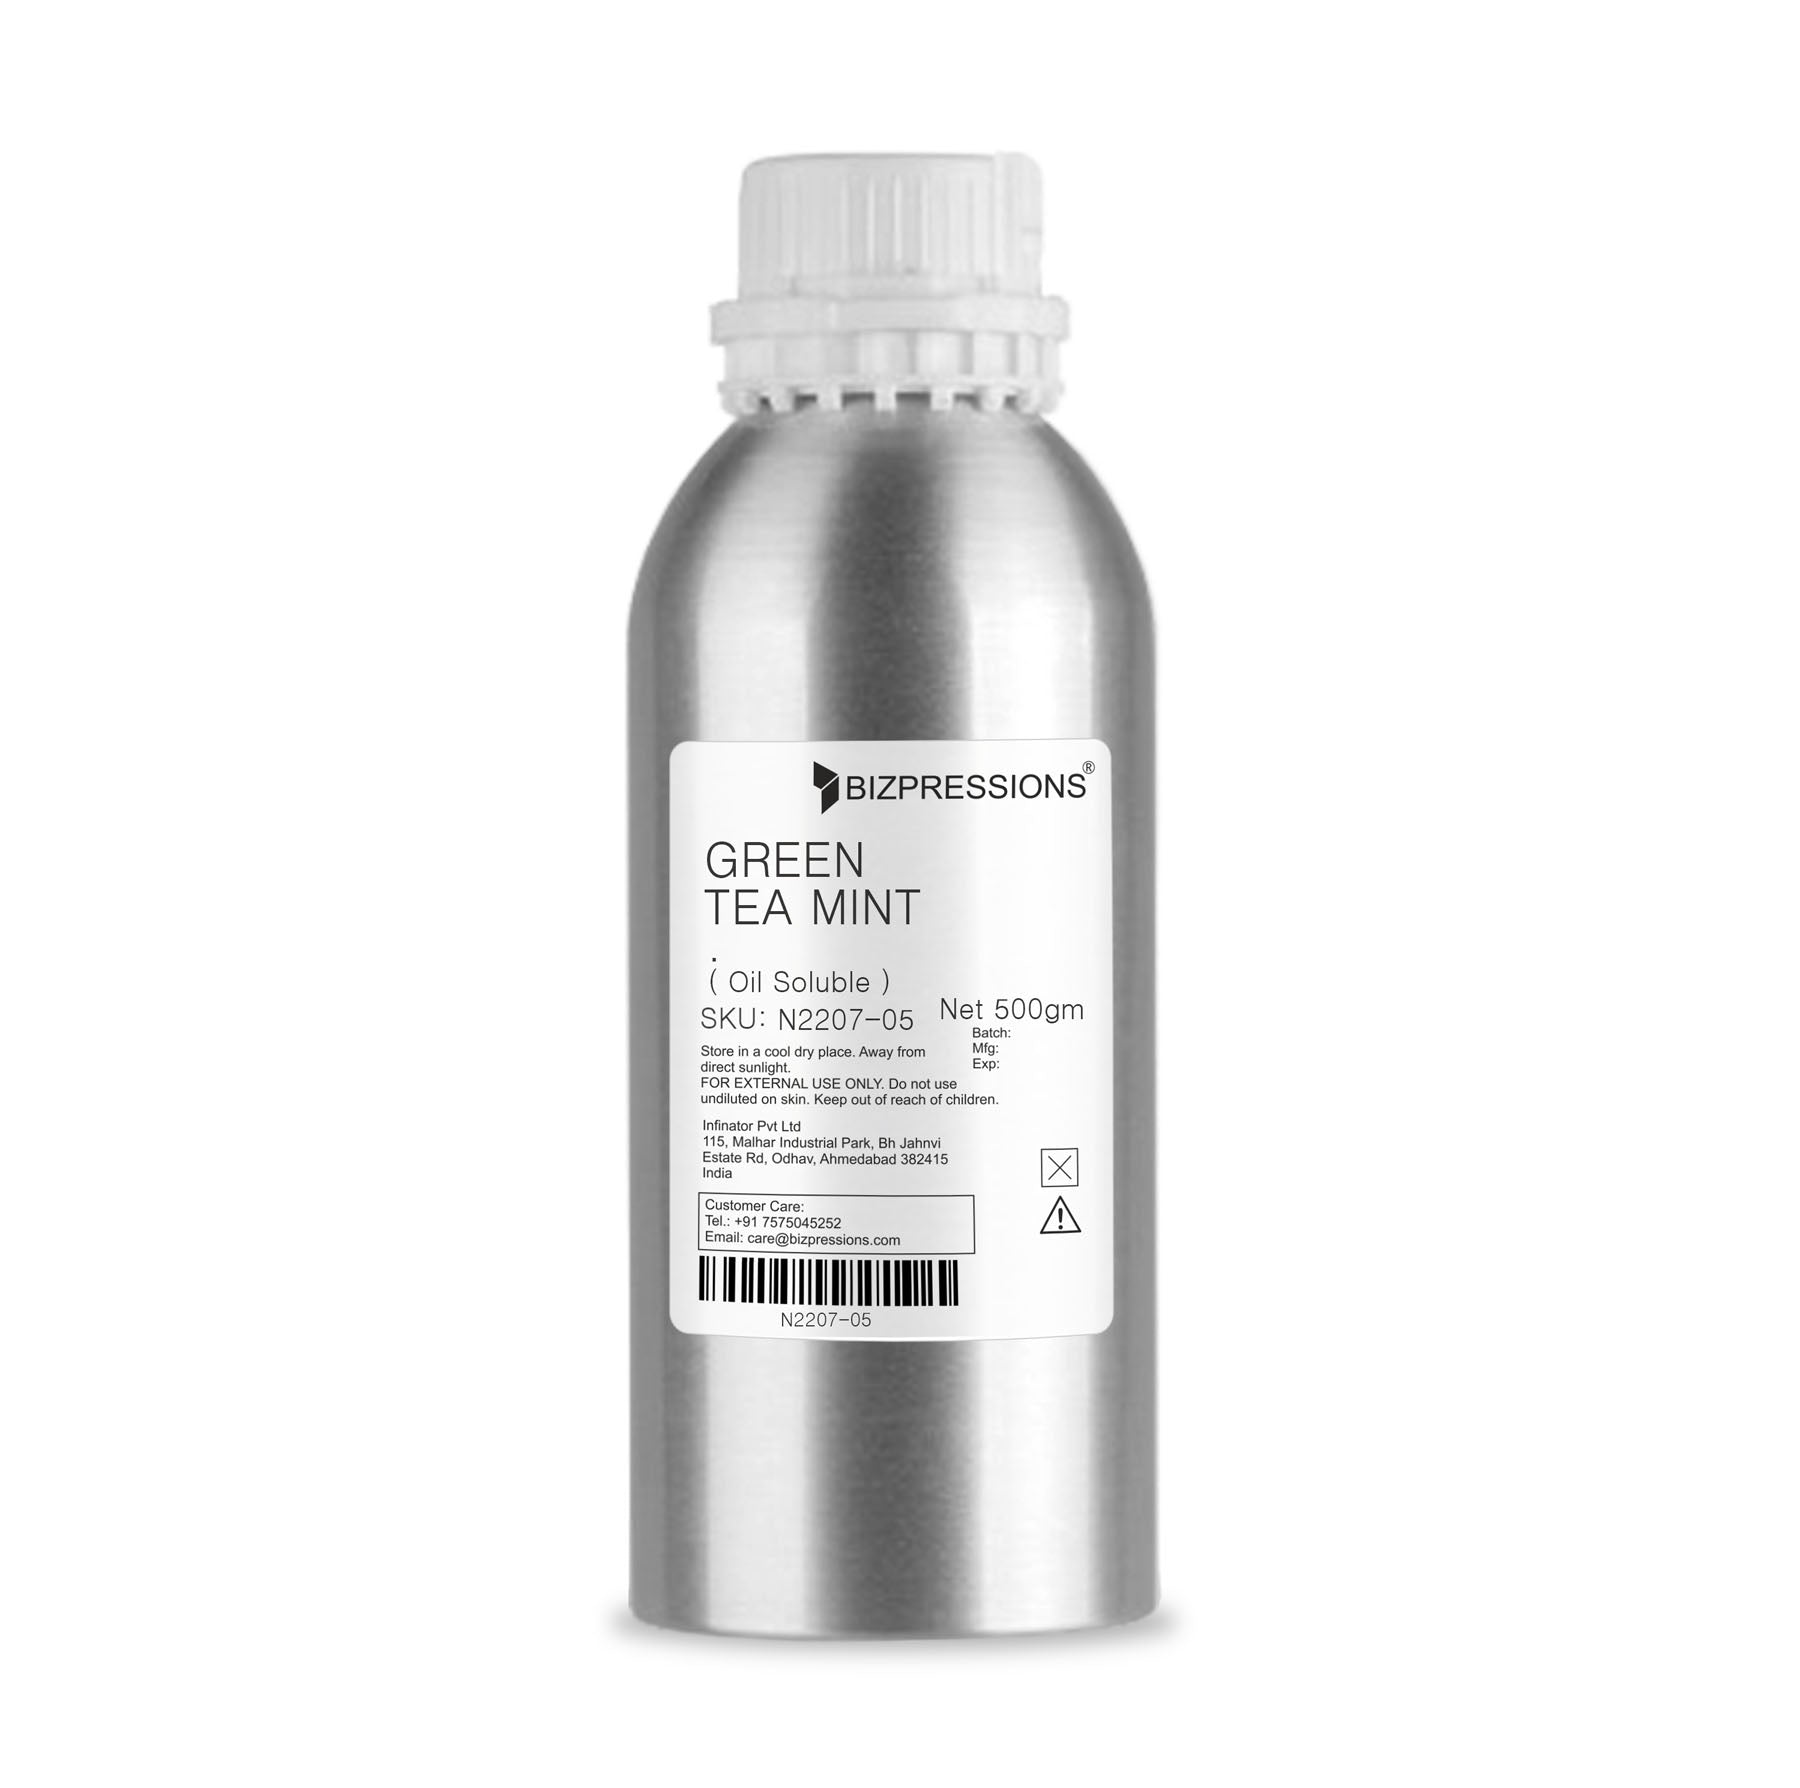 GREEN TEA MINT - Fragrance ( Oil Soluble ) - 500 gm